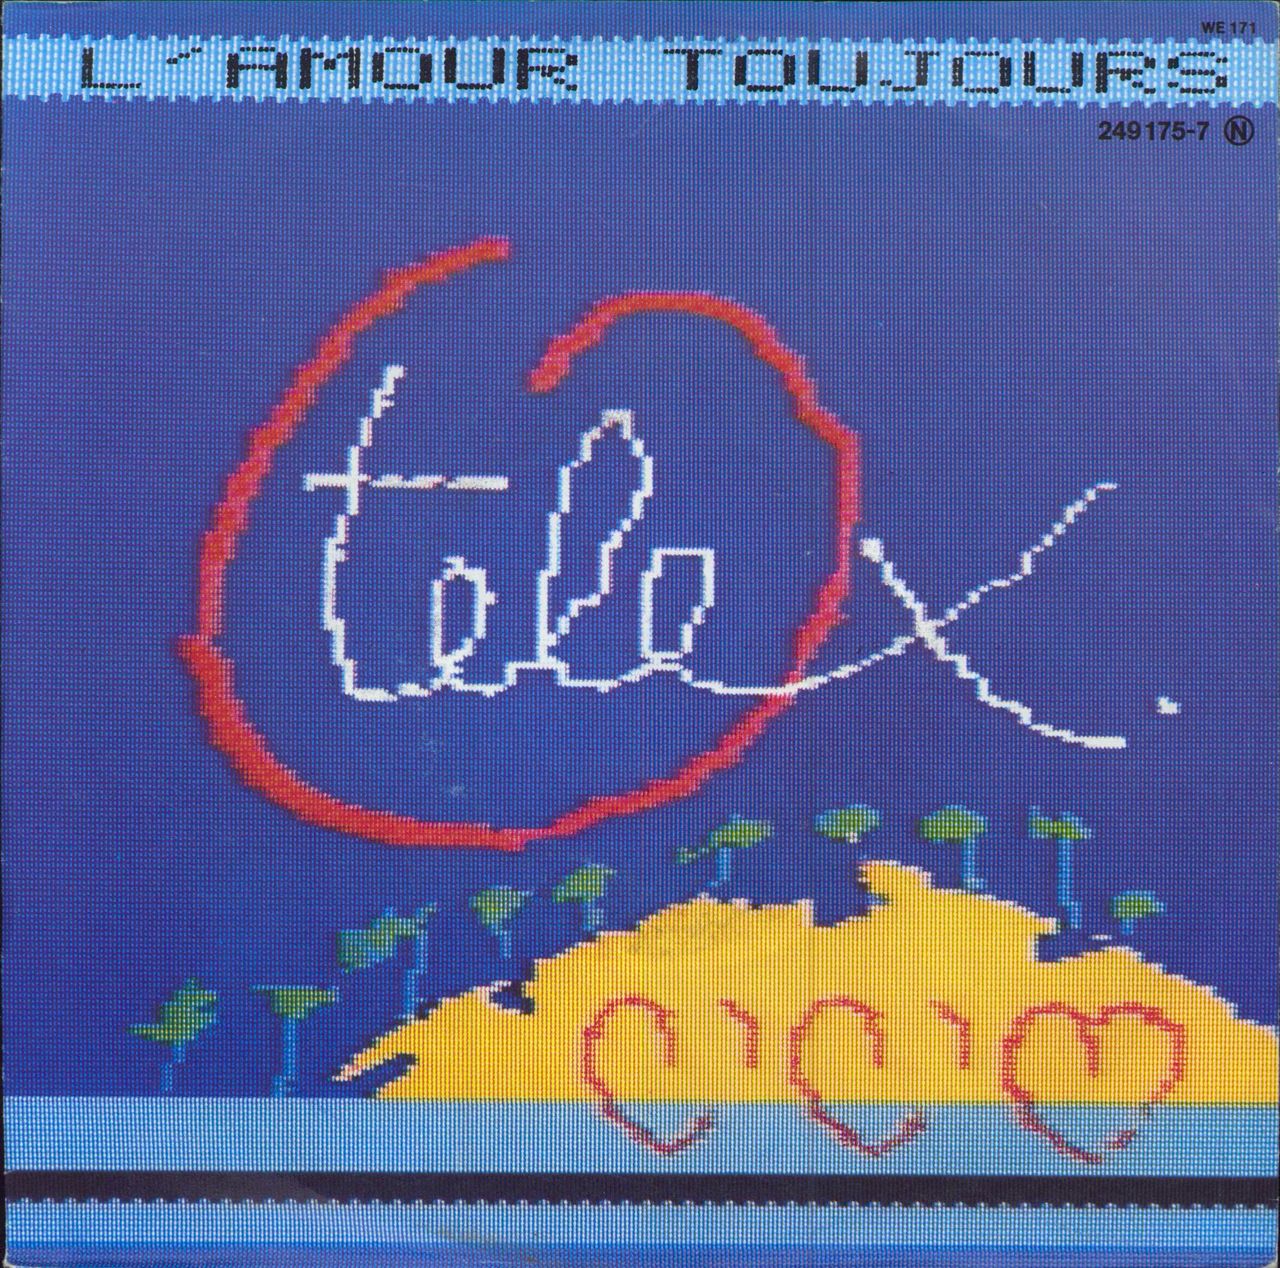 Telex L'Amour Toujours German 7" vinyl single (7 inch record / 45) 249175-7